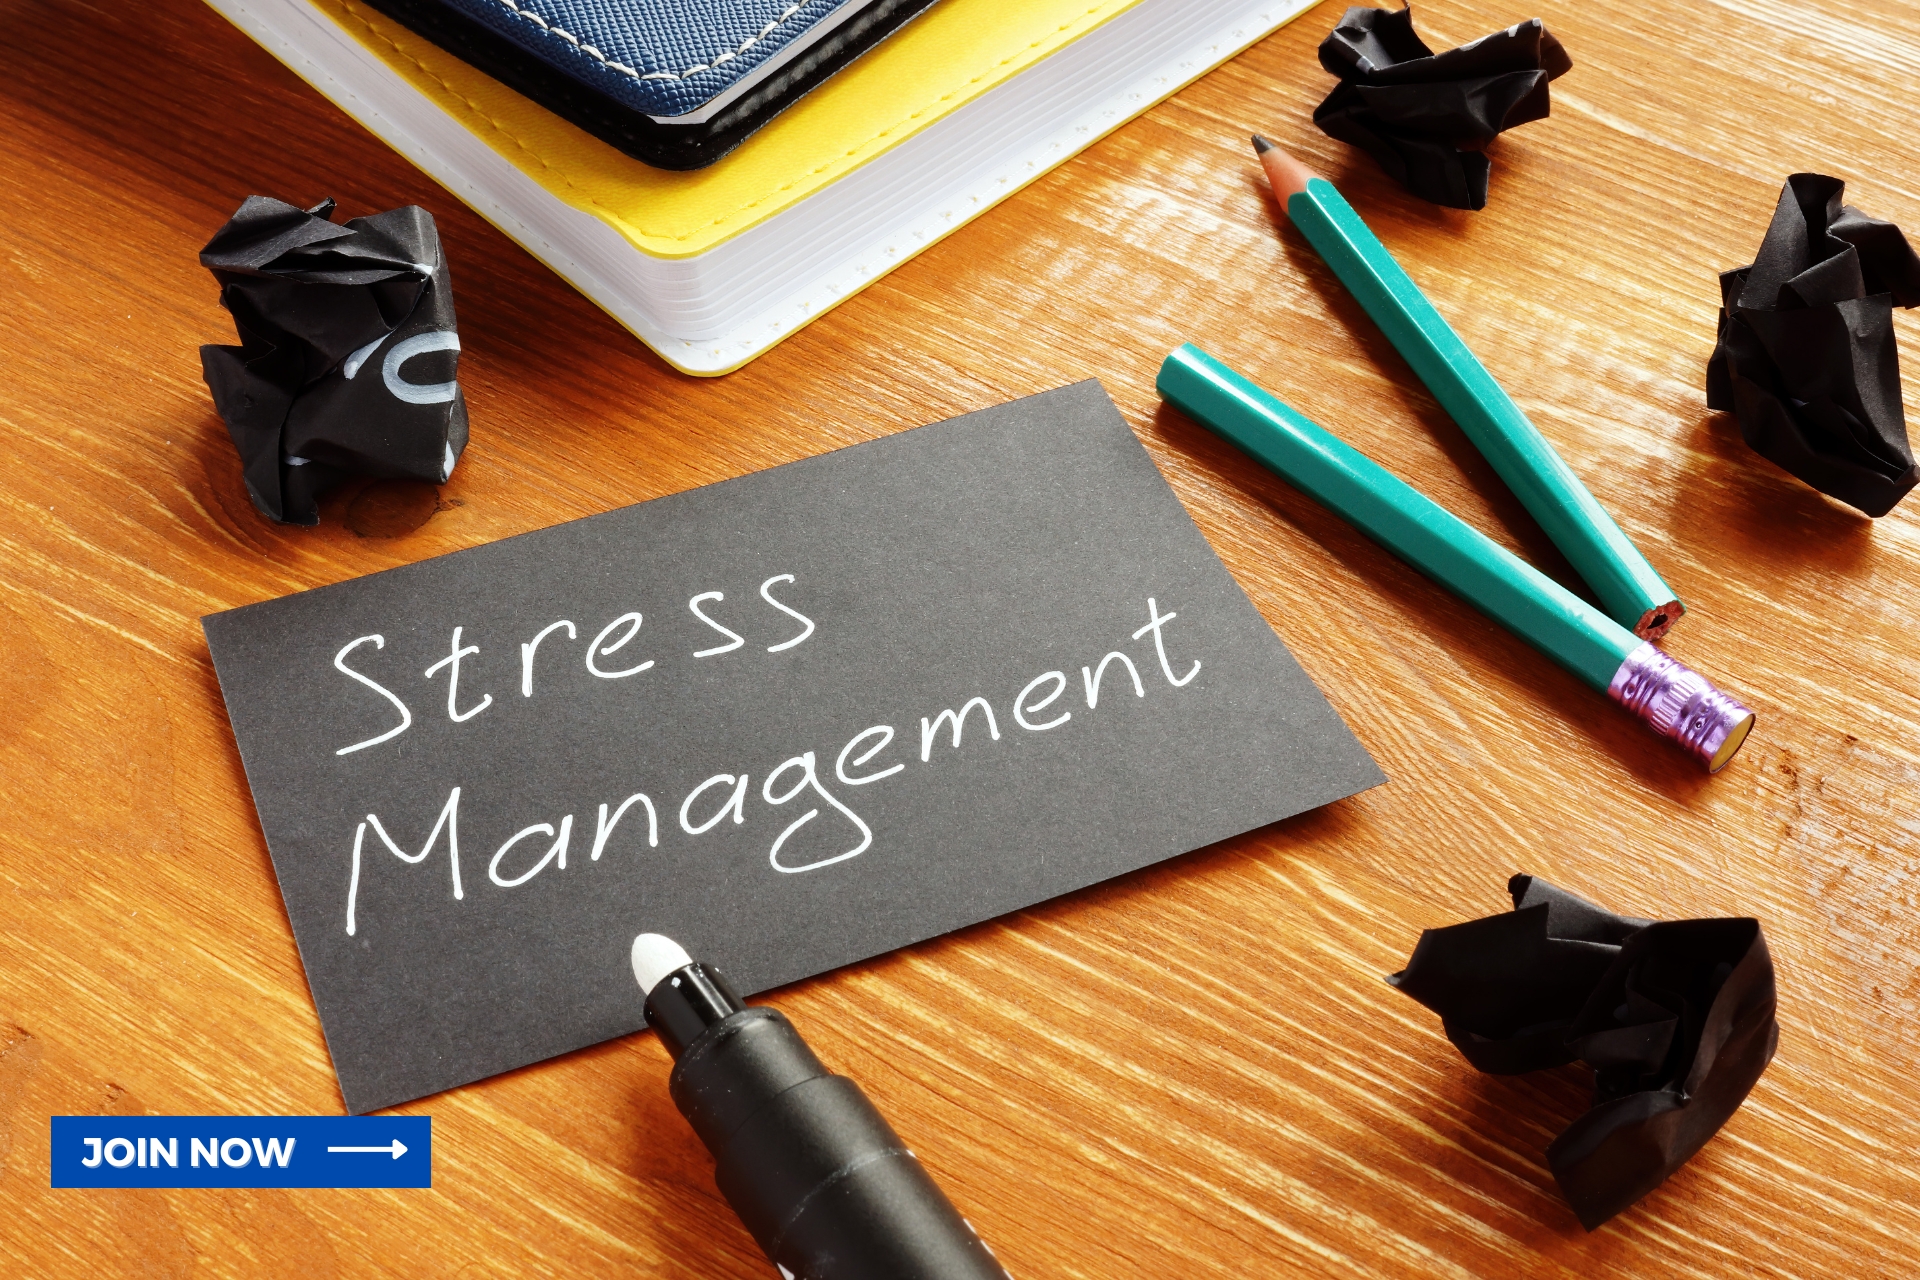 Stress management programs